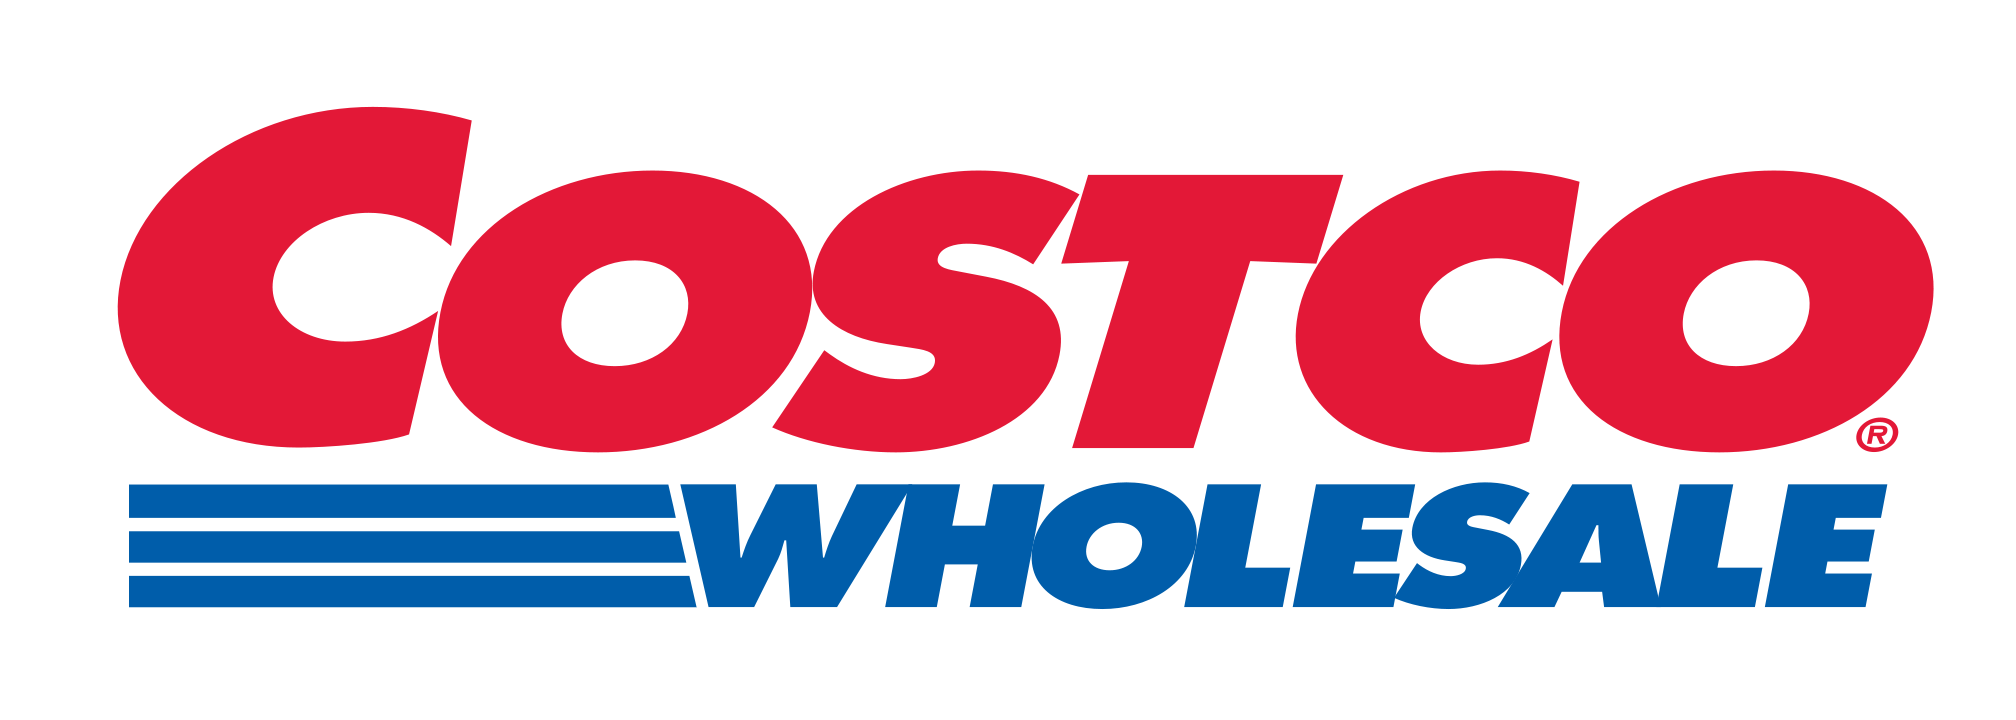 Costco Wholesale Logo PNG Image